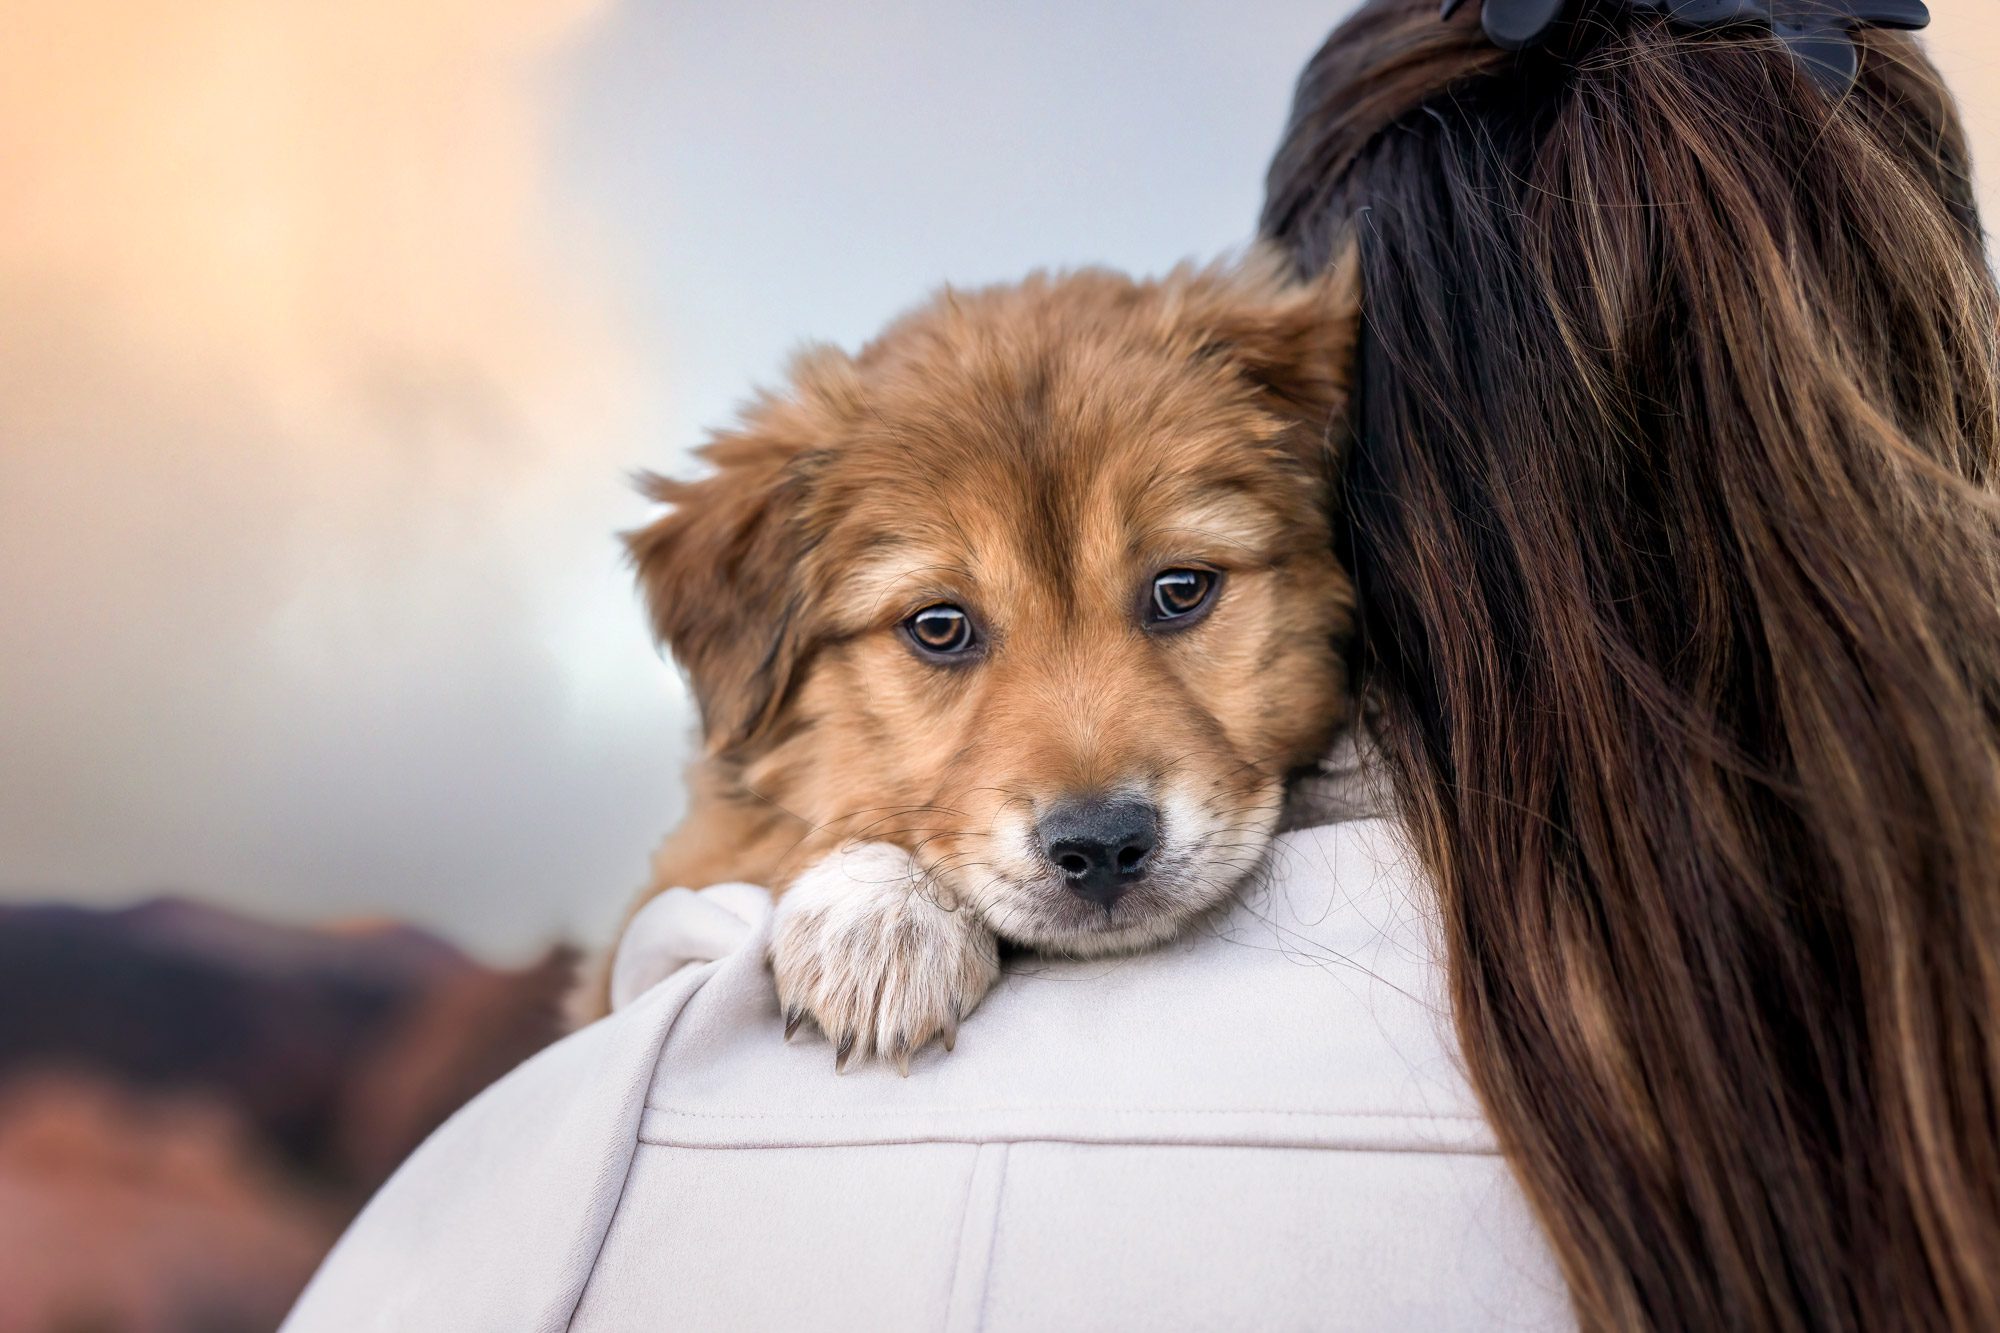 Puppy looking over owner's shoulder